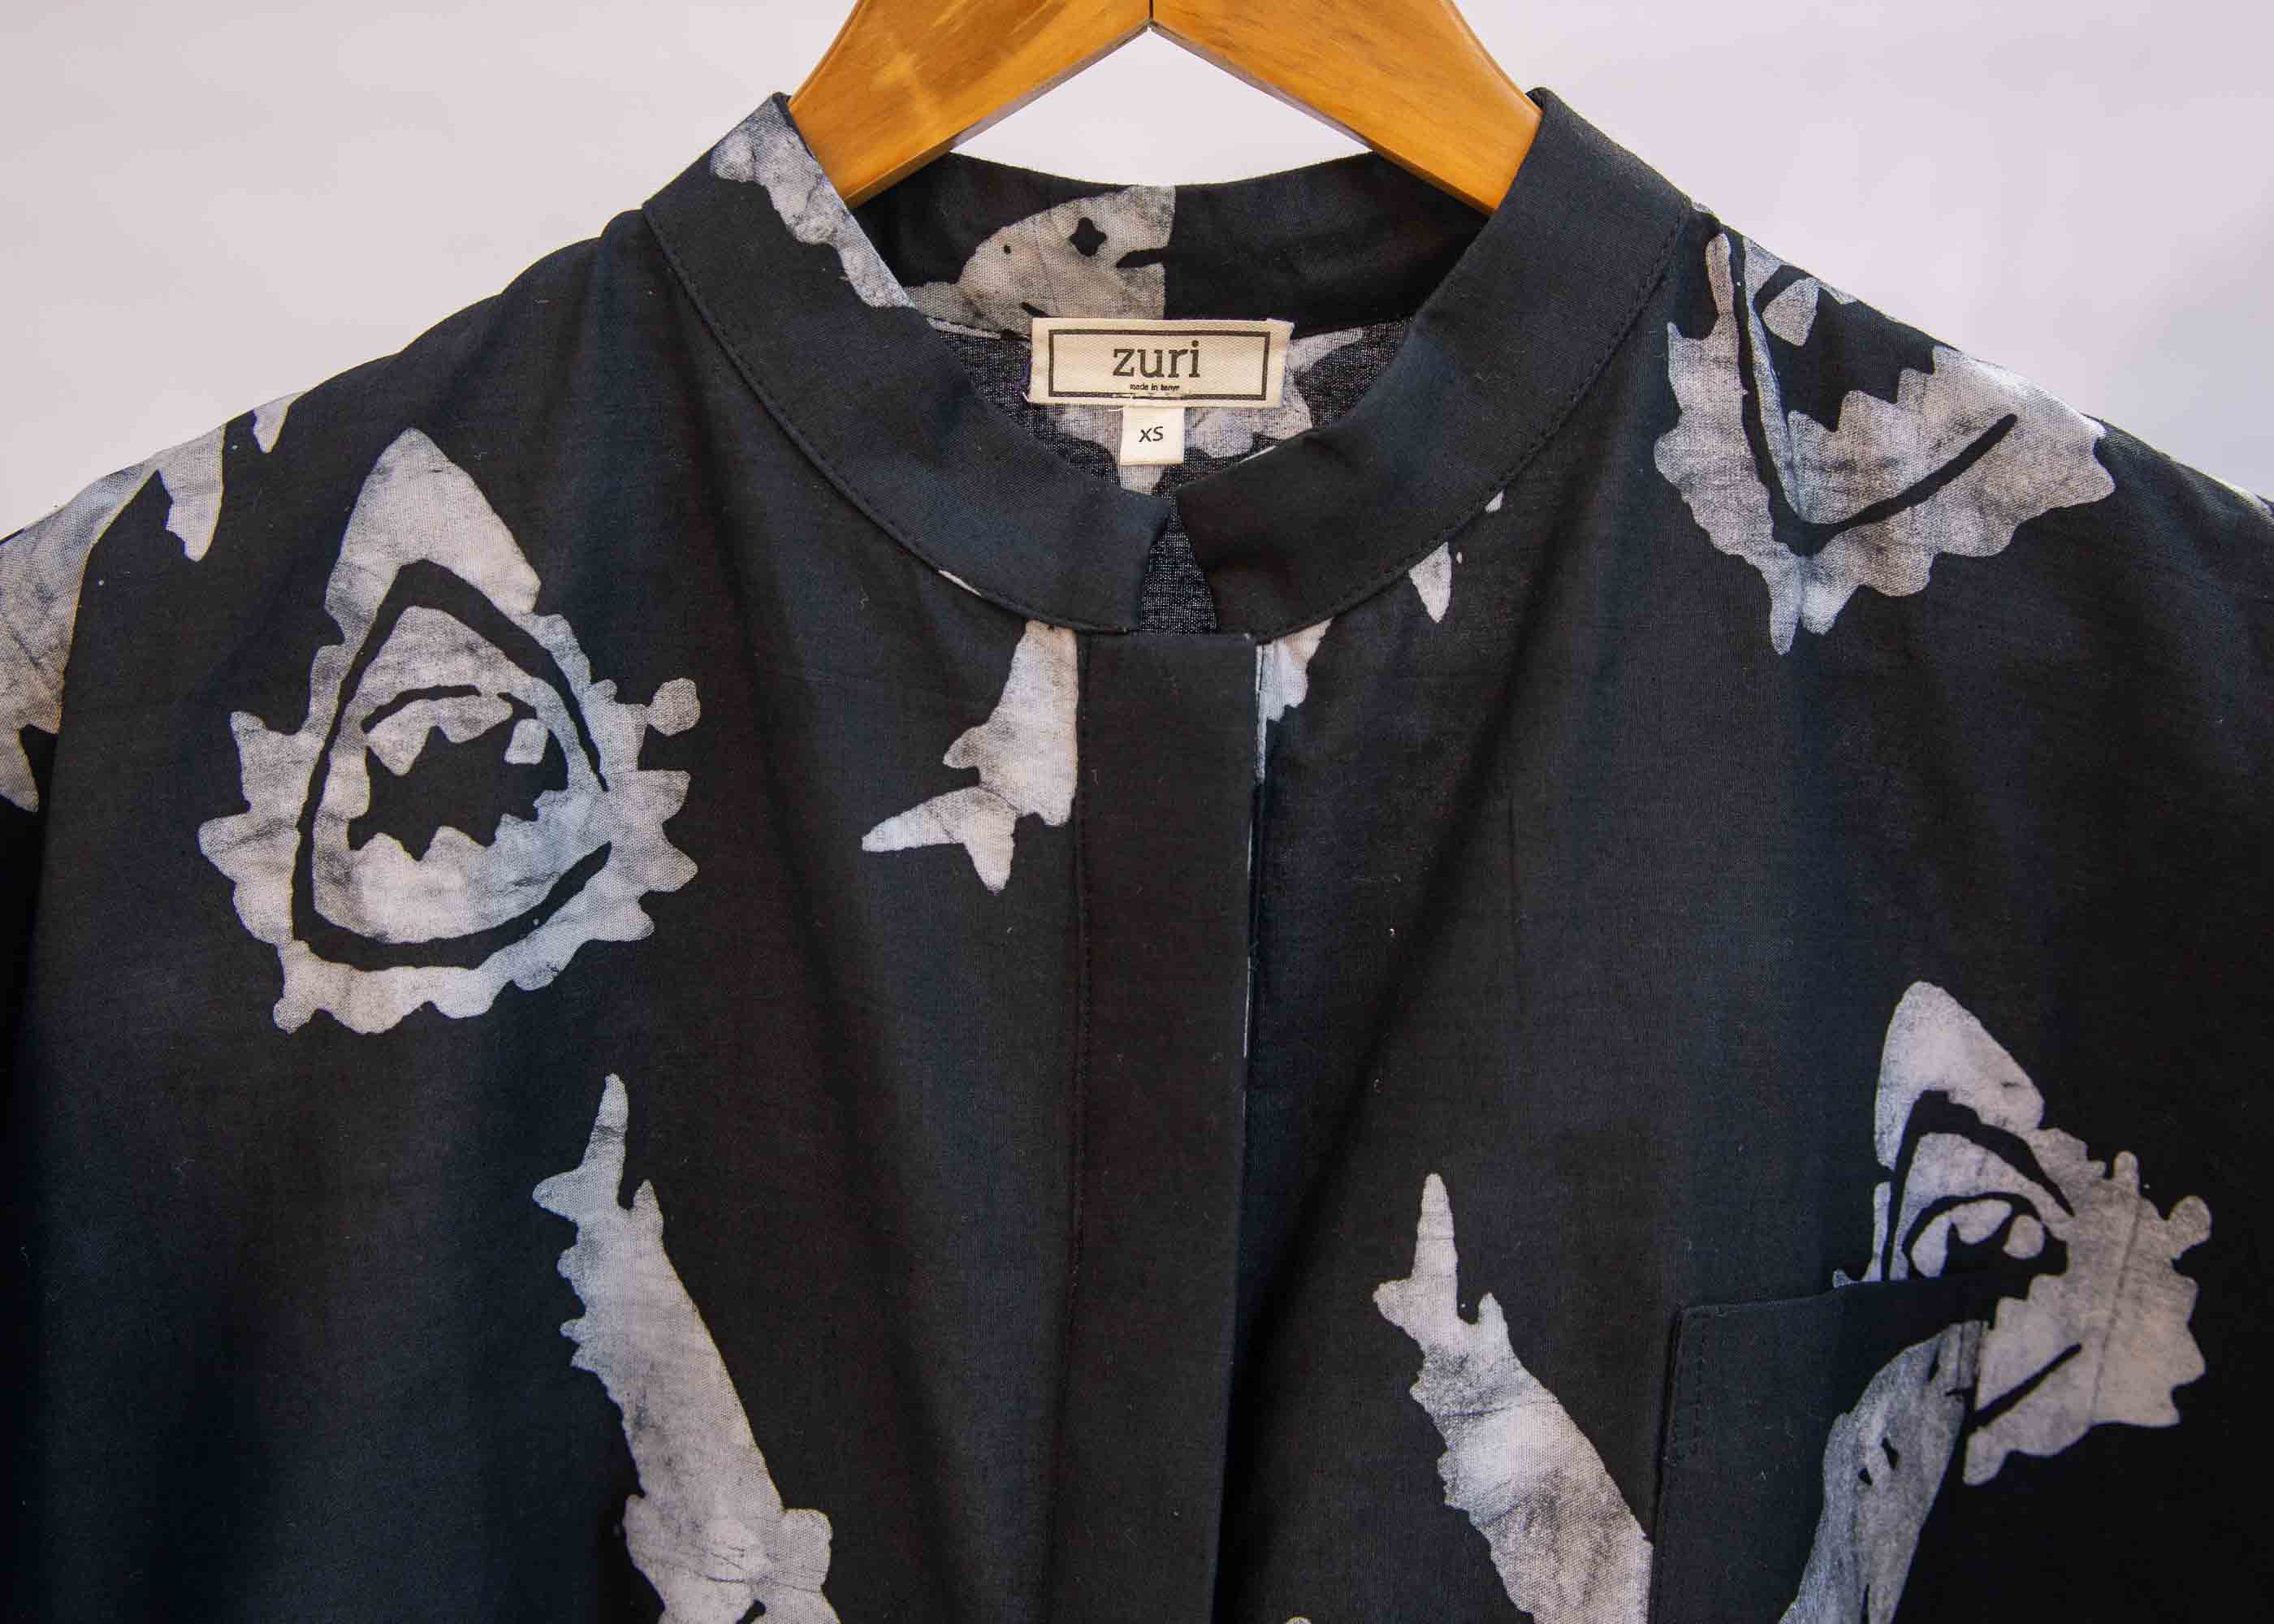 display of a black and white shark print tee shirt